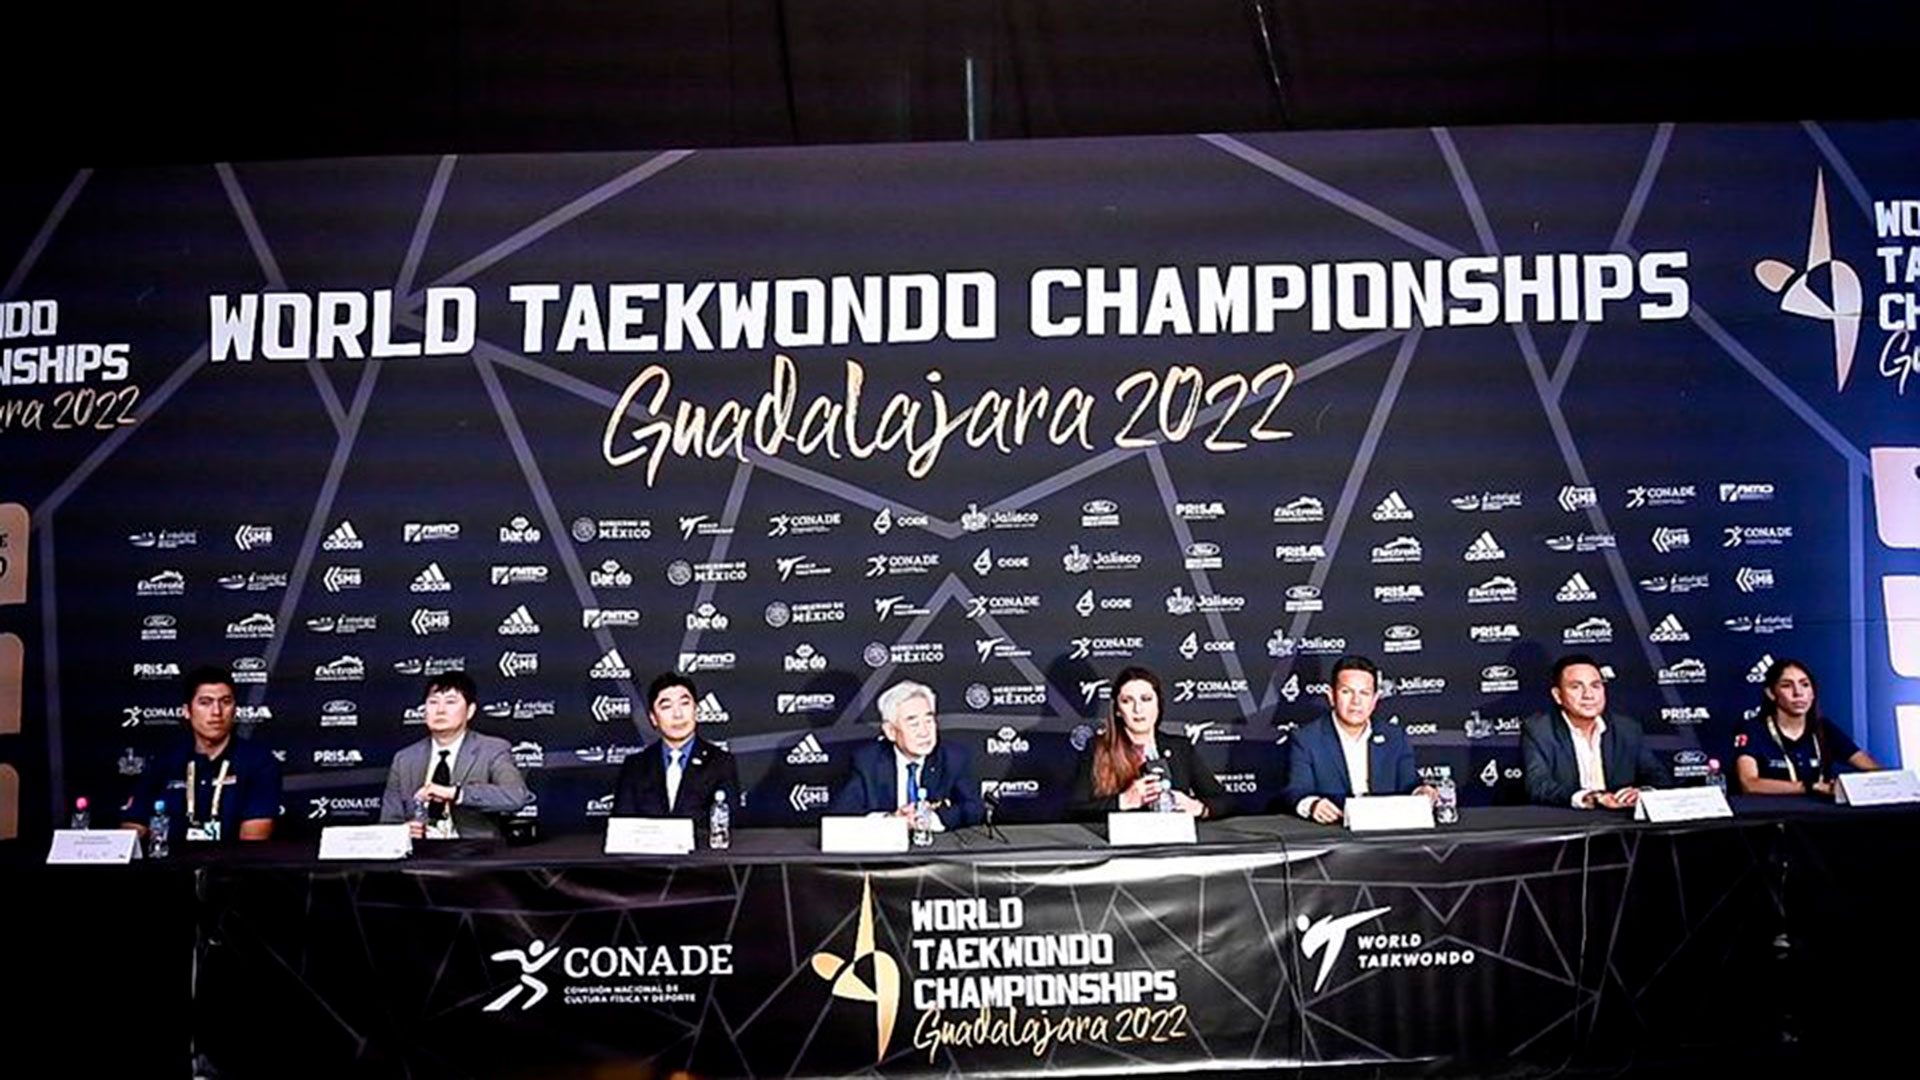 World Taekwondo Championship Referees